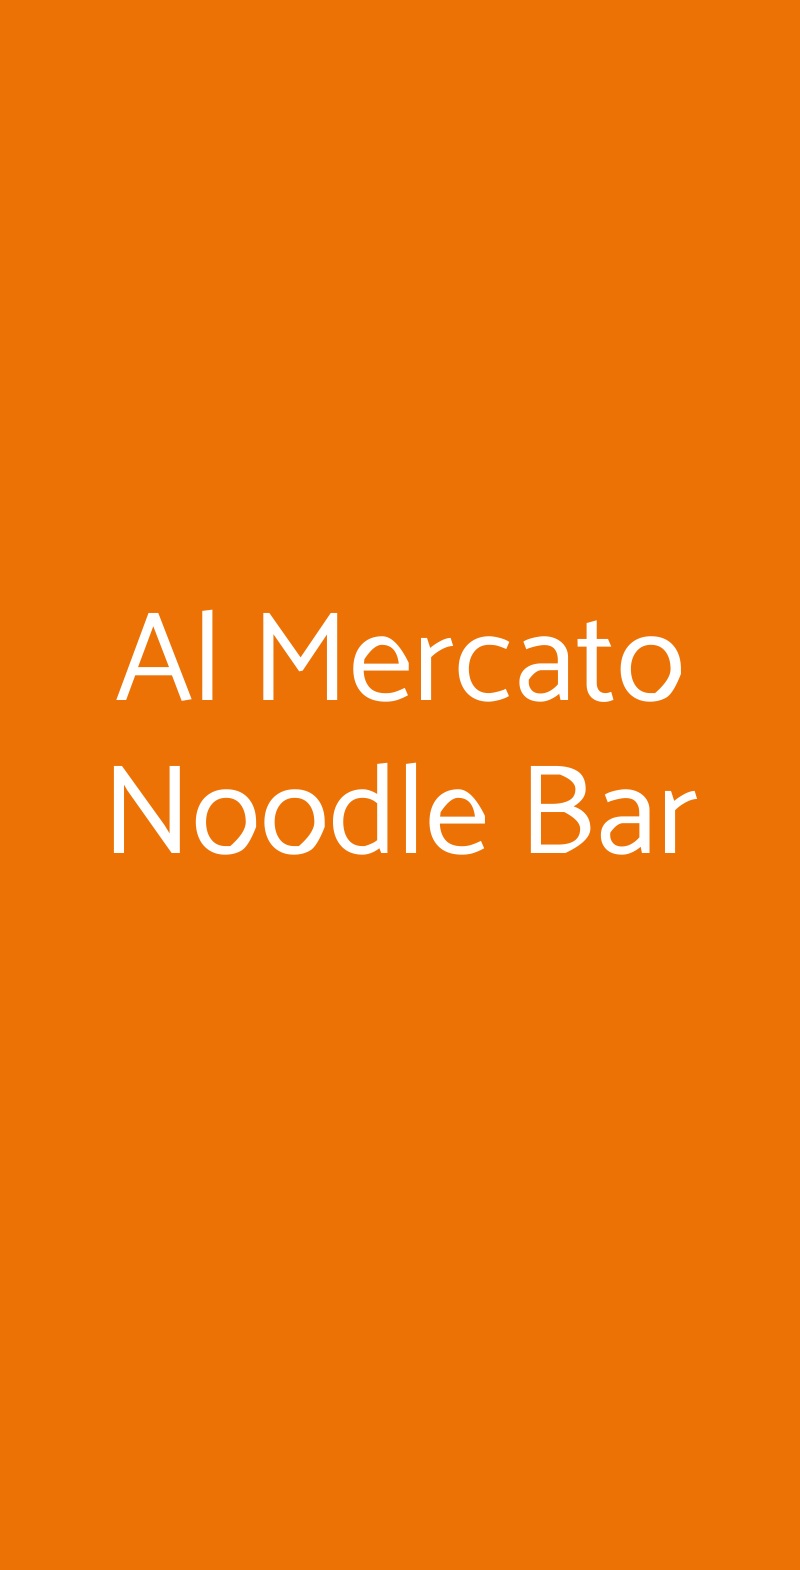 Al Mercato Noodle Bar Milano menù 1 pagina